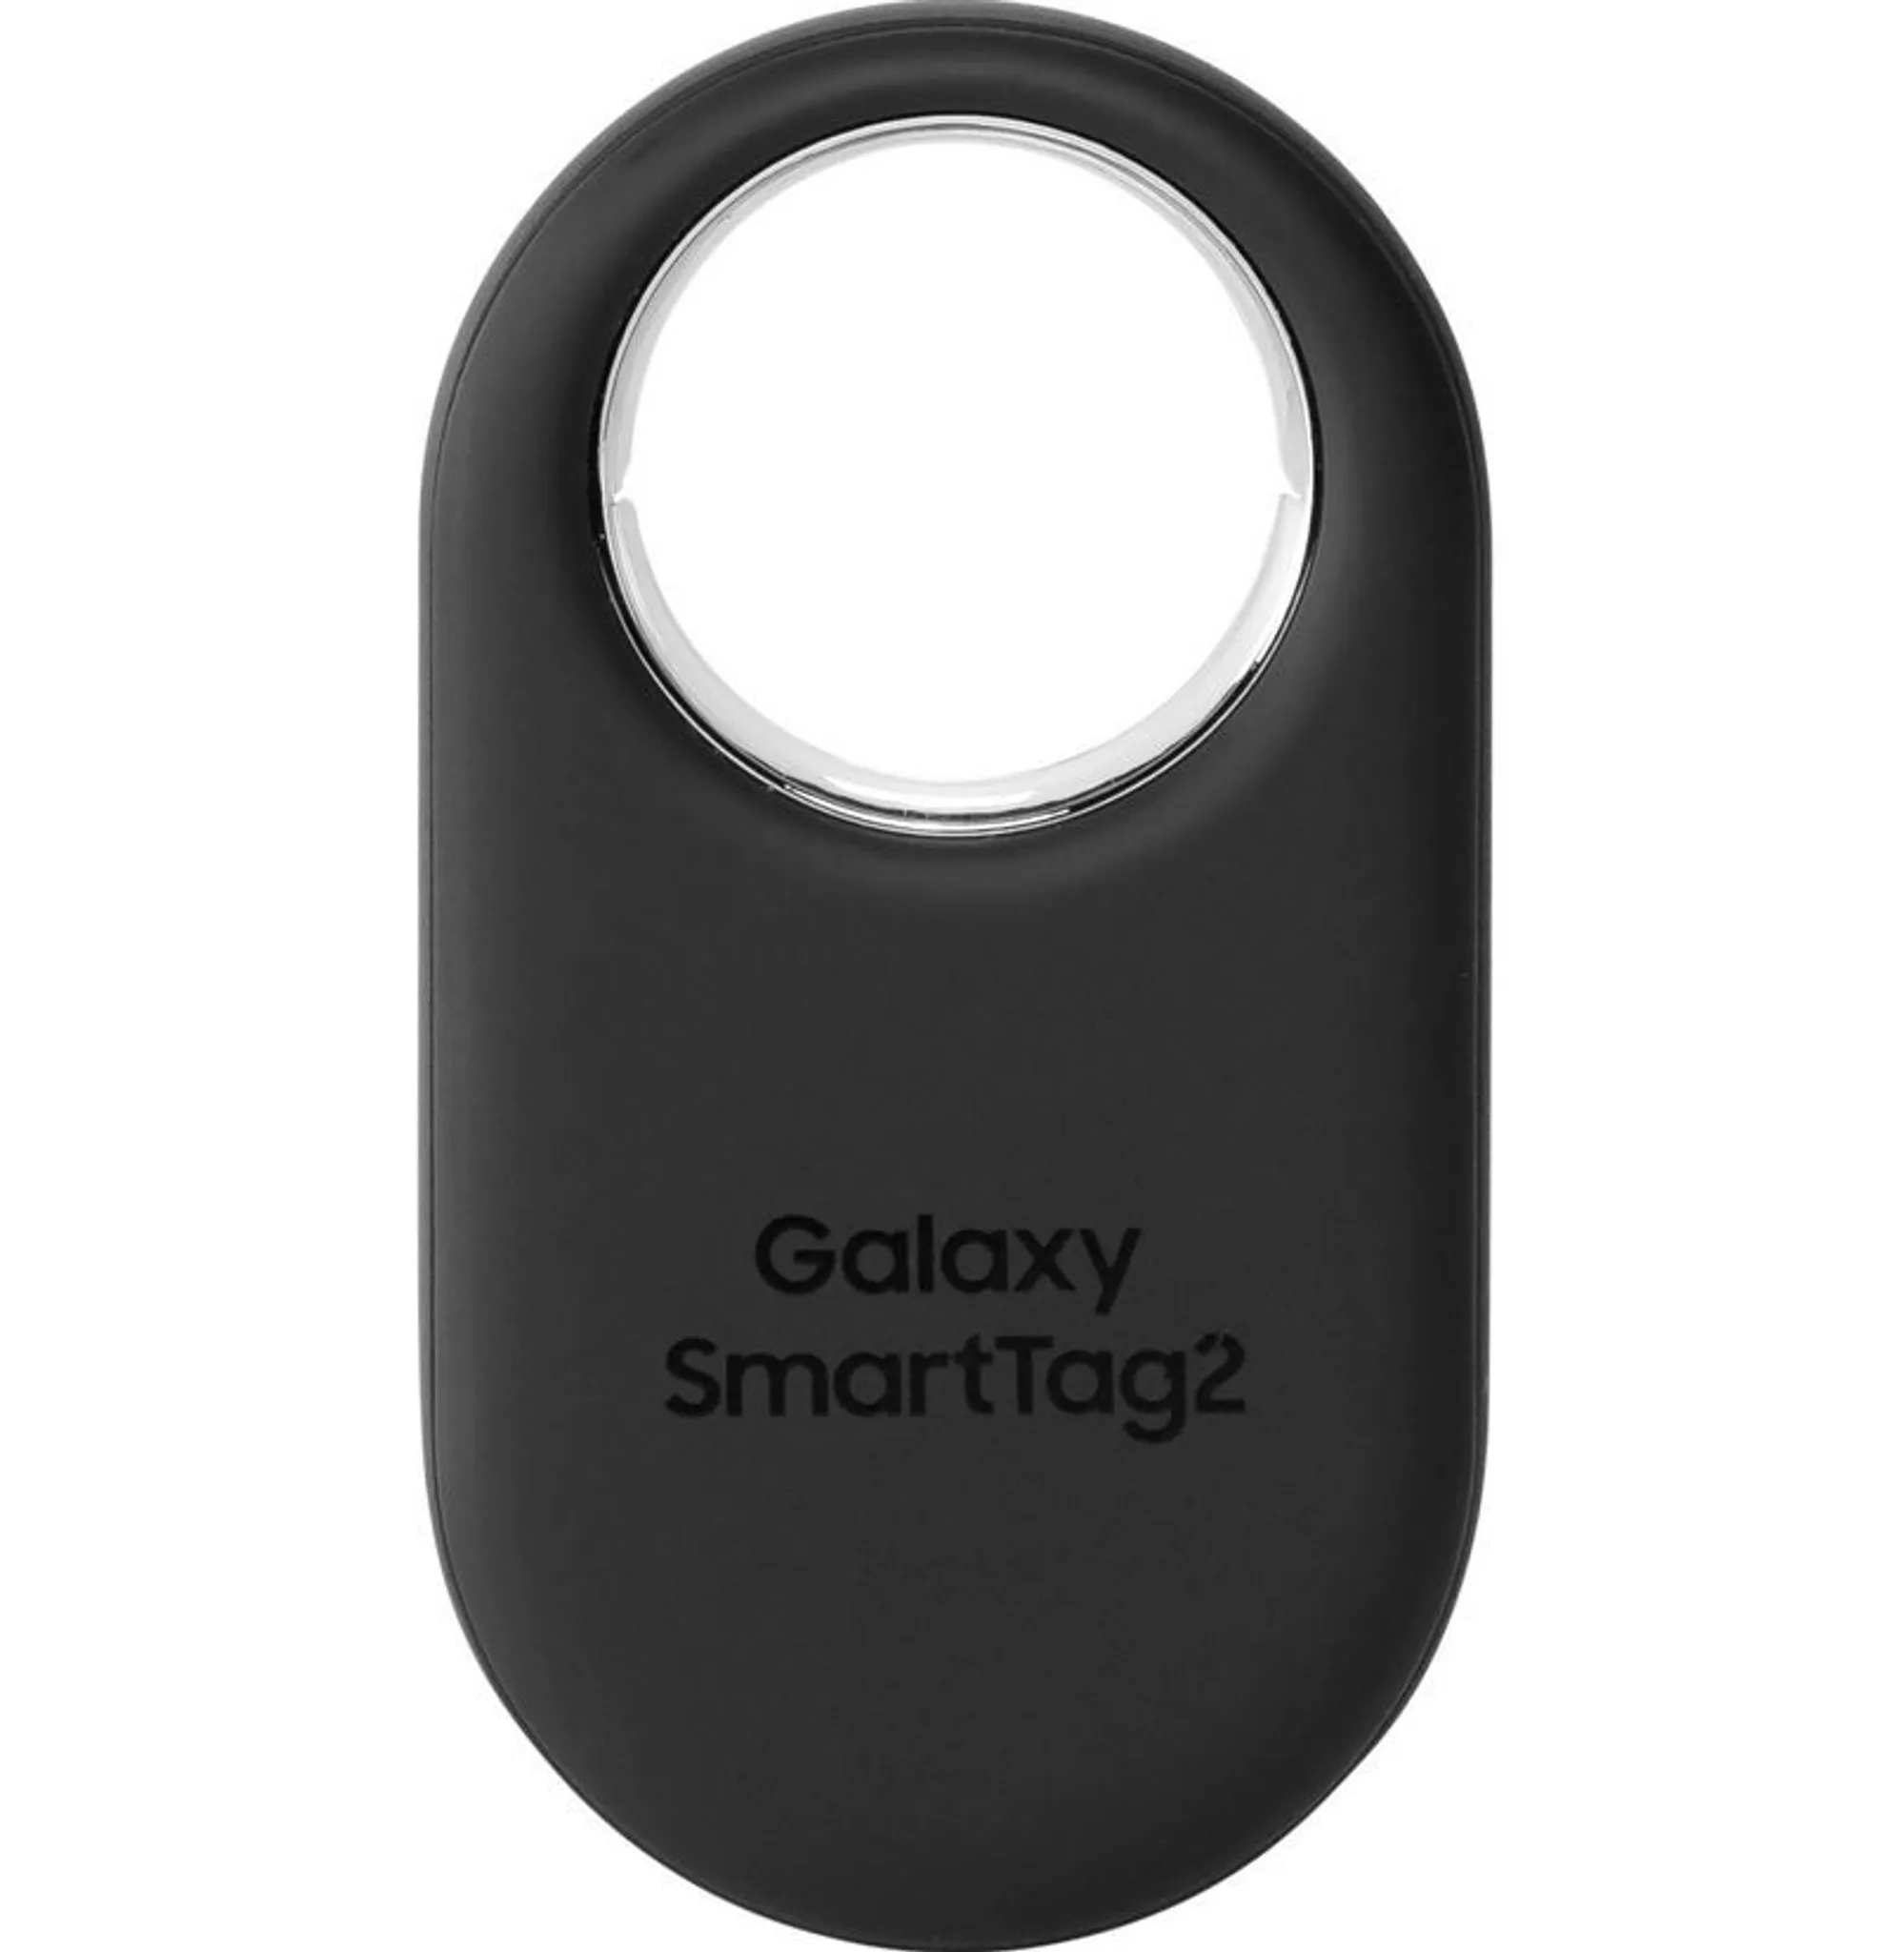 Samsung Galaxy SmartTag 2 EI-T5600 4er Pack 2x black+ white Item